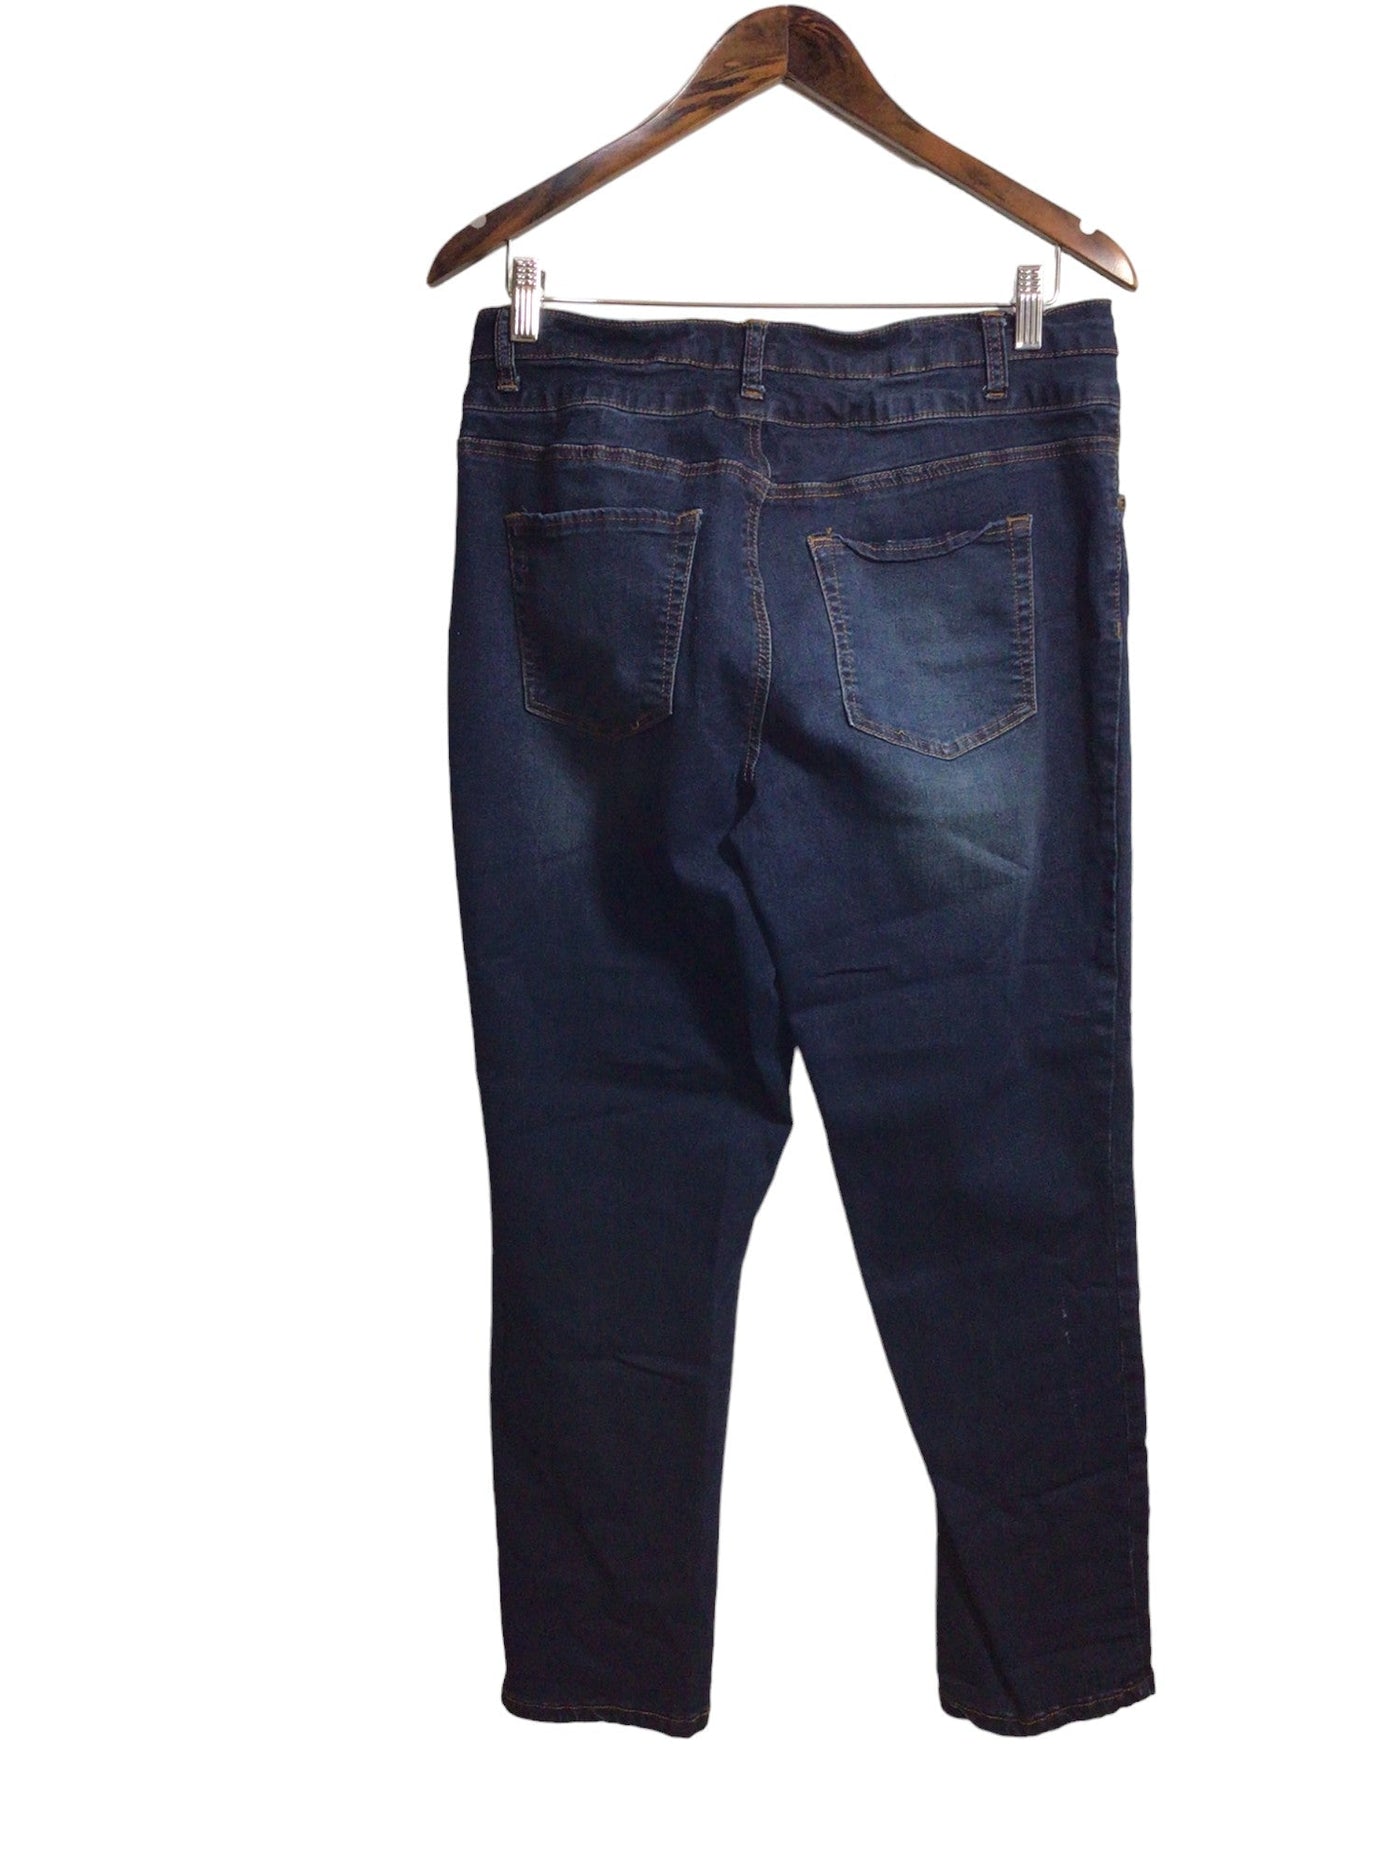 BLUENOTES Women Straight-Legged Jeans Regular fit in Blue - Size 34x28 | 16.5 $ KOOP